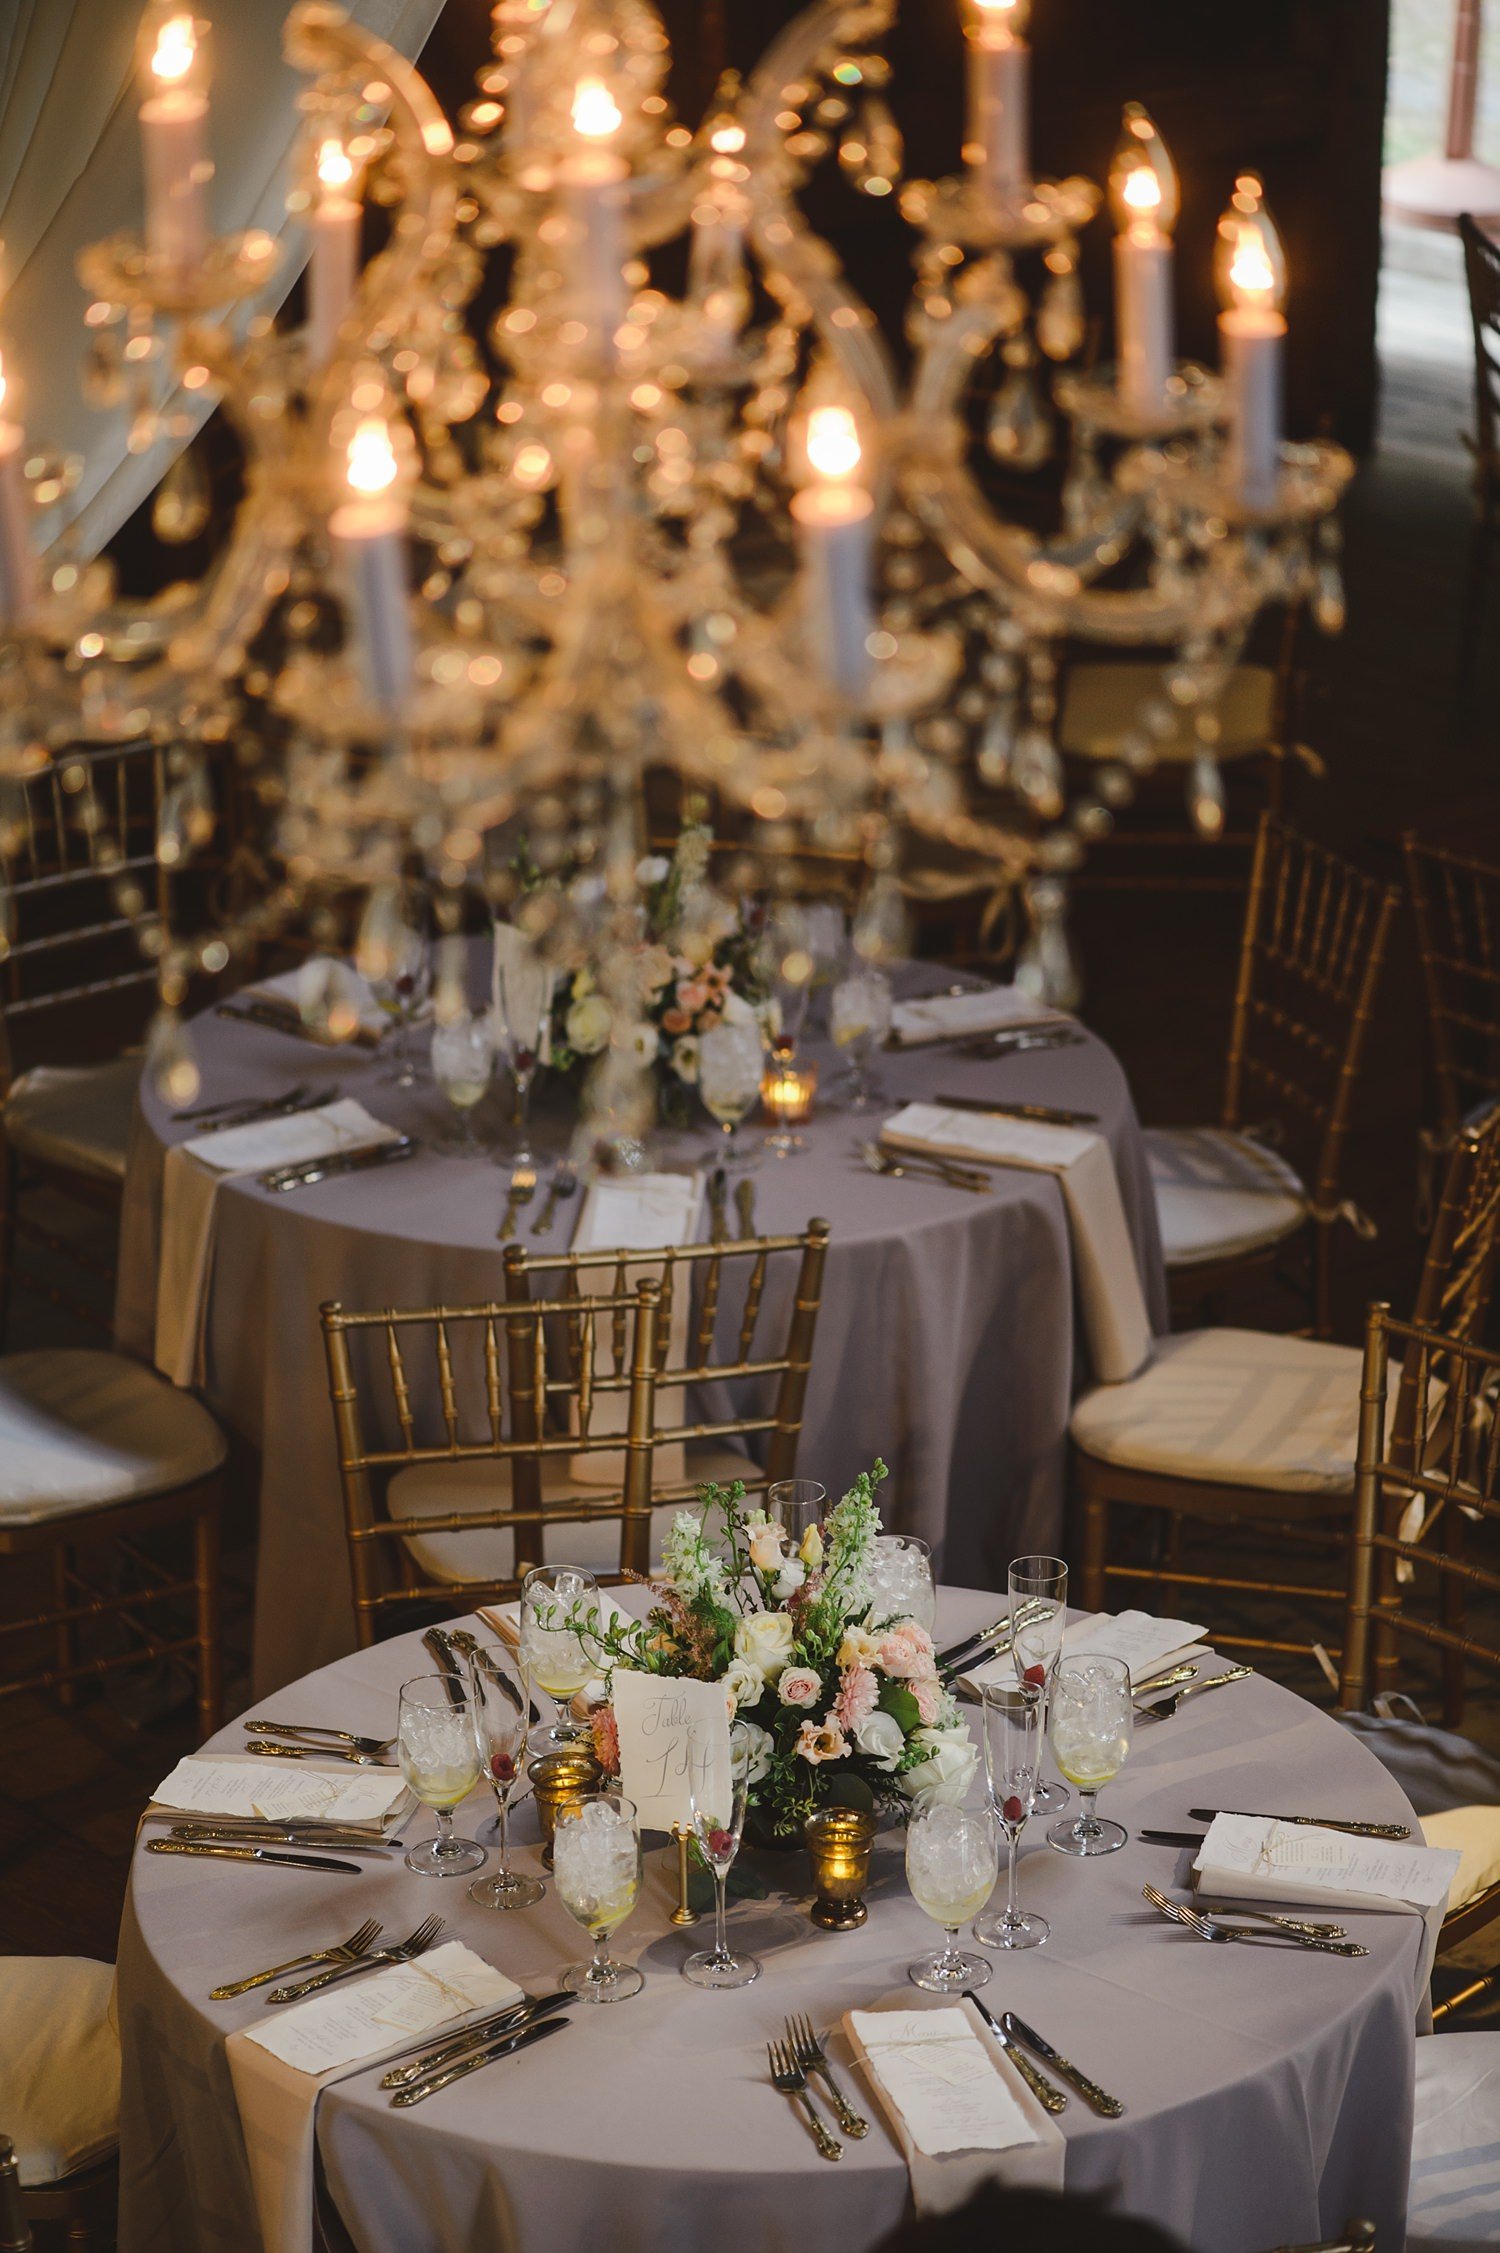 Rustic & Glamorous chandelier wedding at The Webb Barn in Wethersfield, CT